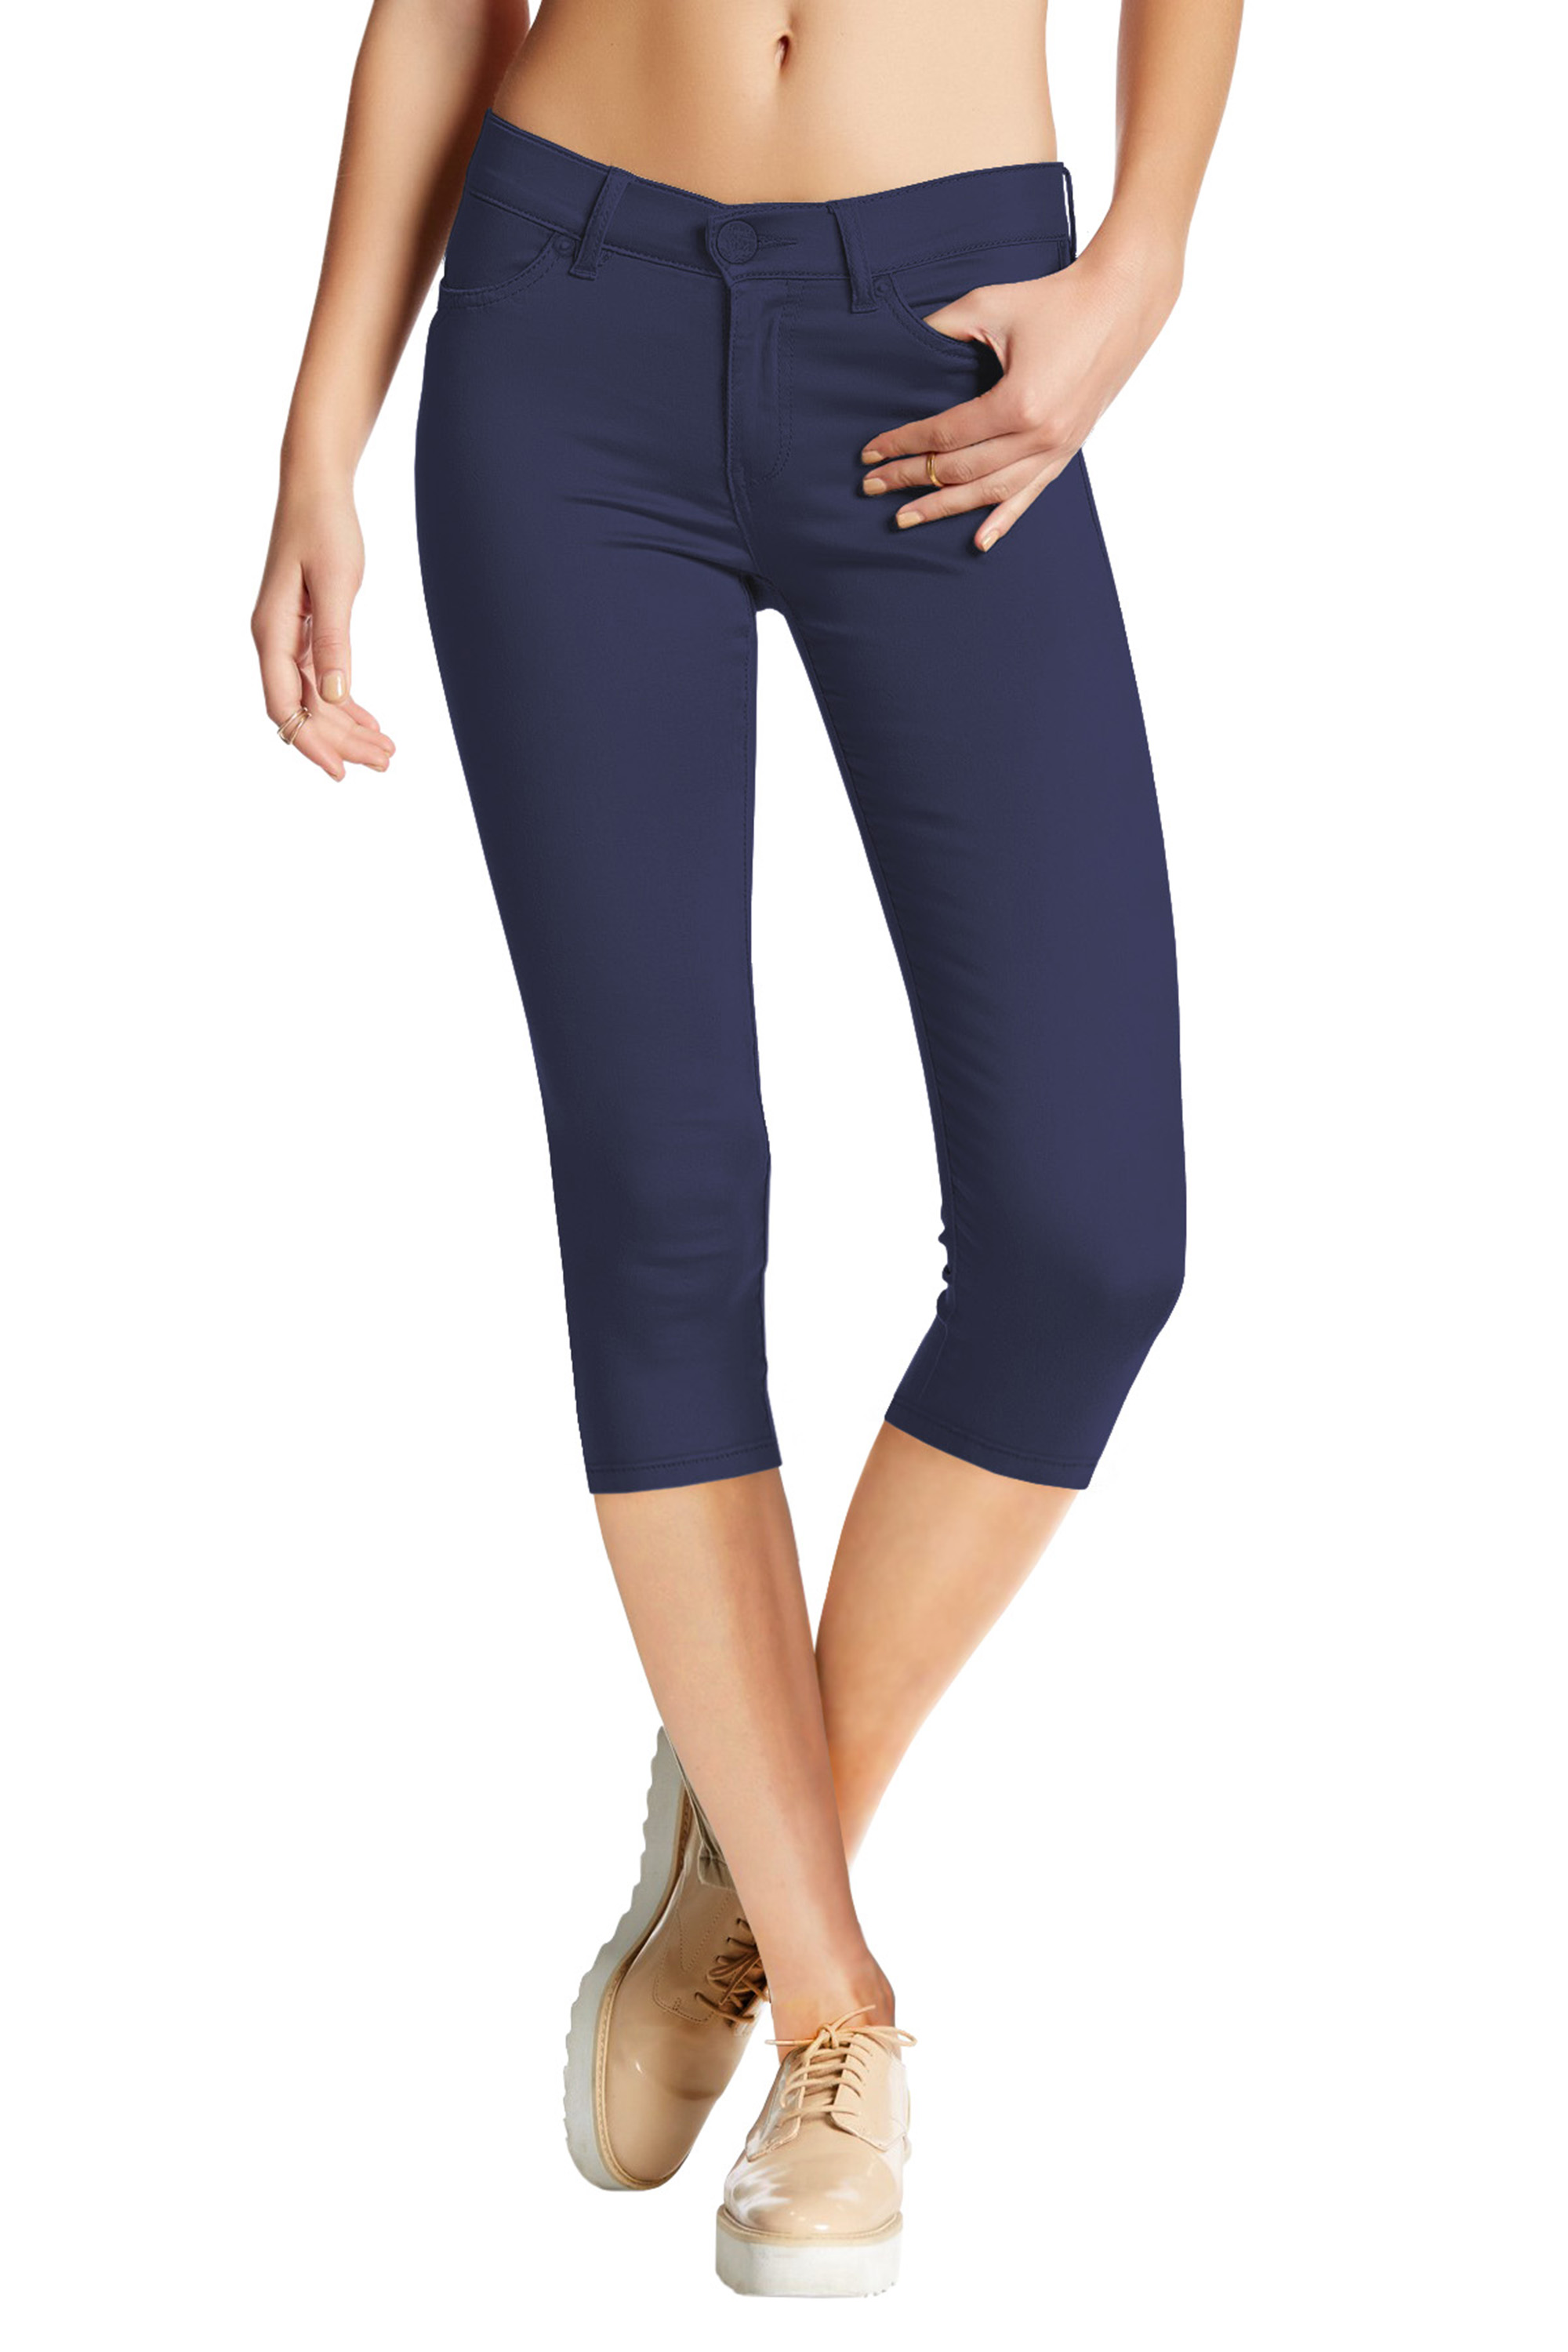 Hybrid and Company Women's Hyper Stretch Denim Capri Jeans - image 1 of 3